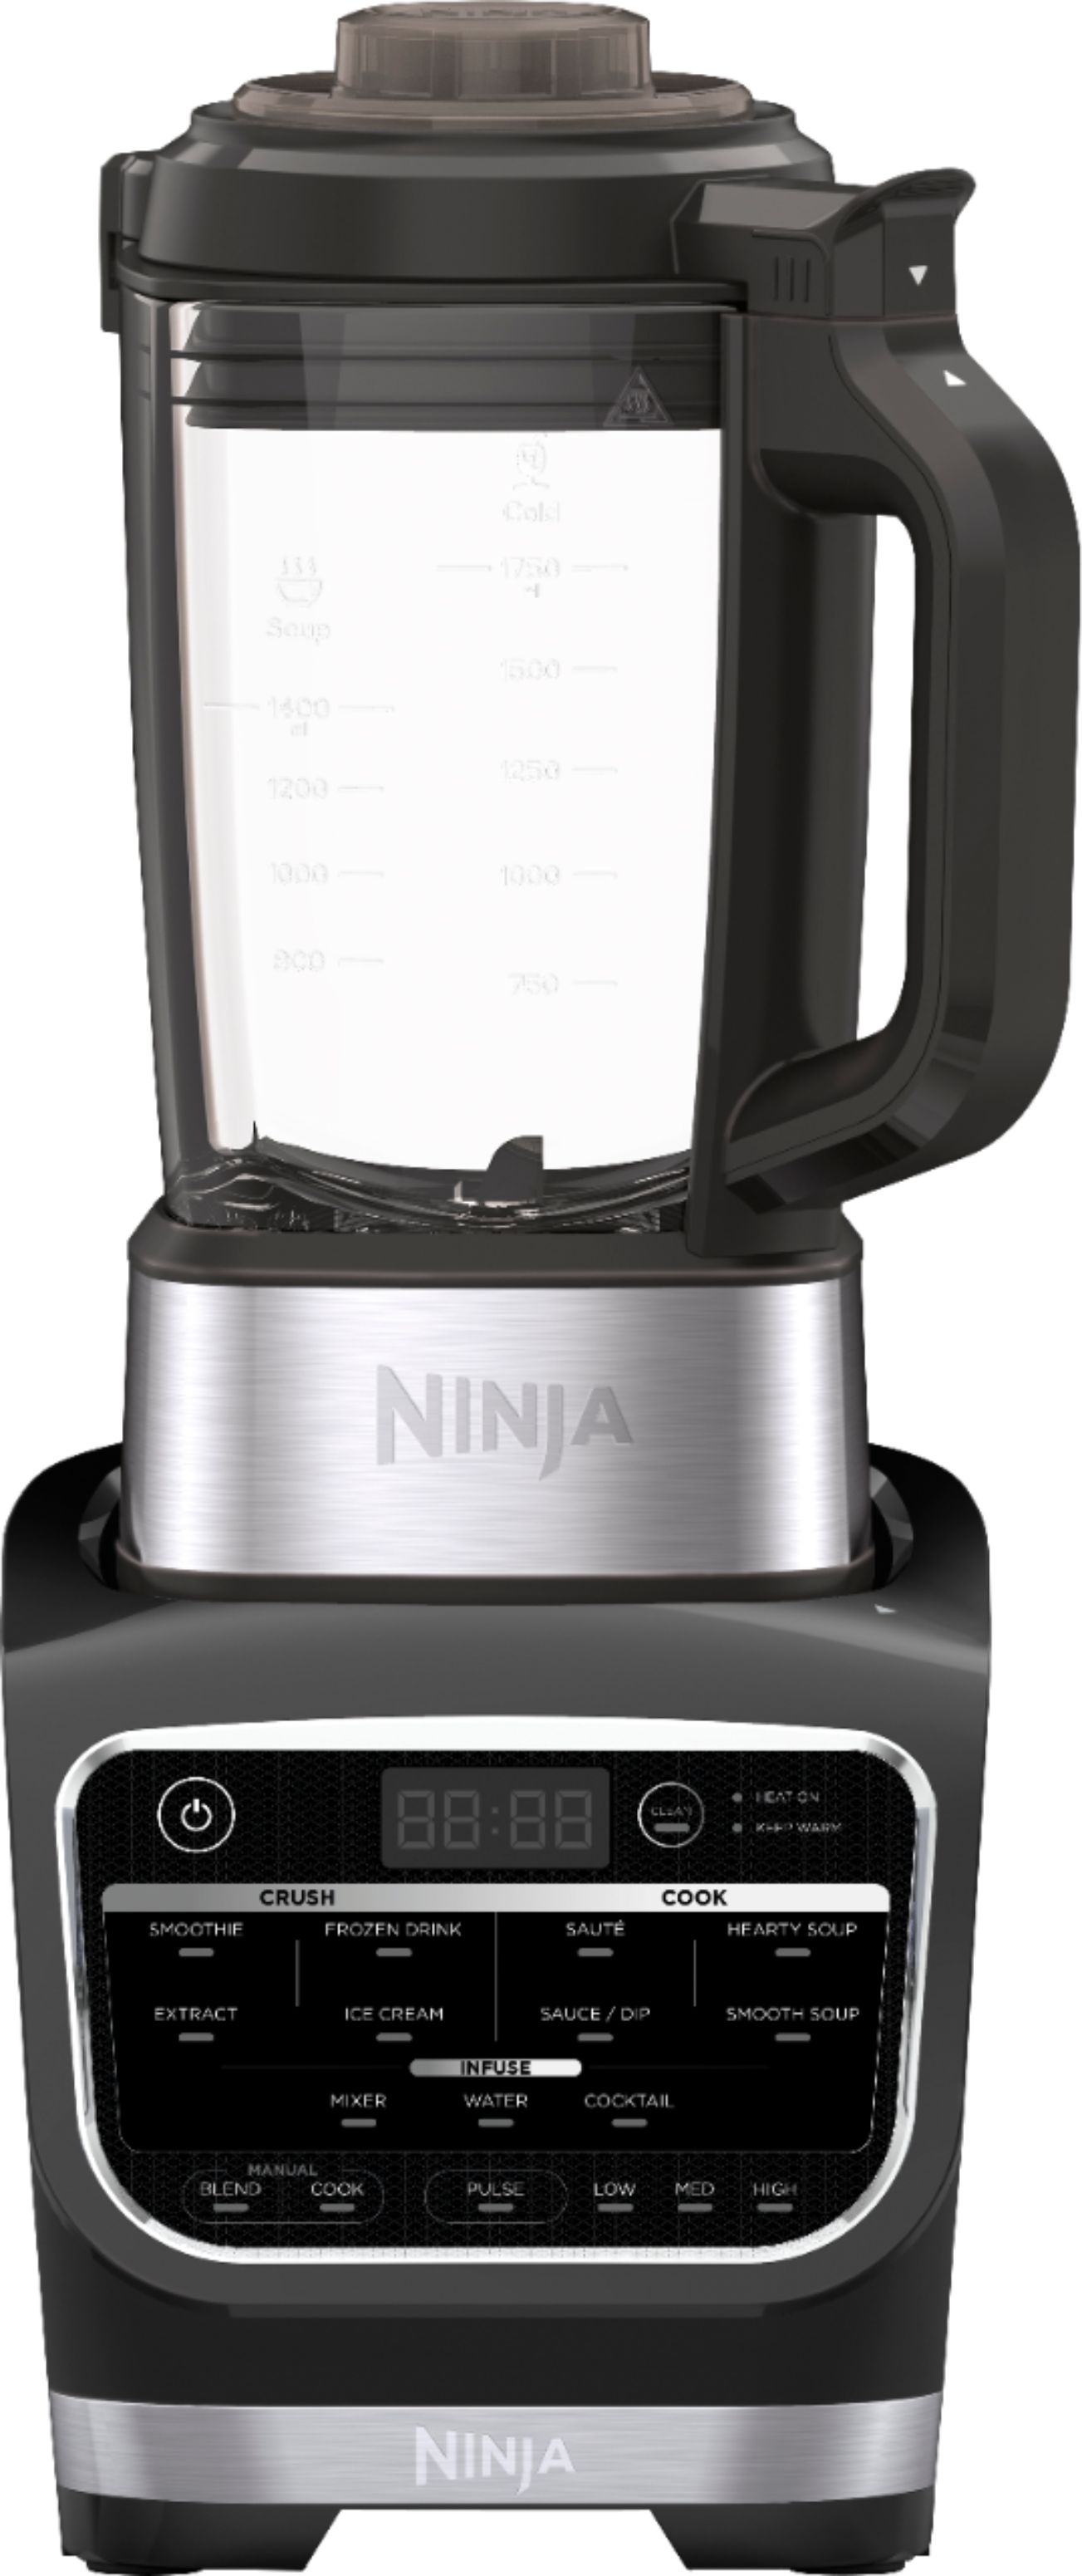 Angle View: Ninja - Foodi Cold & Hot Blender - Stainless Steel/Black